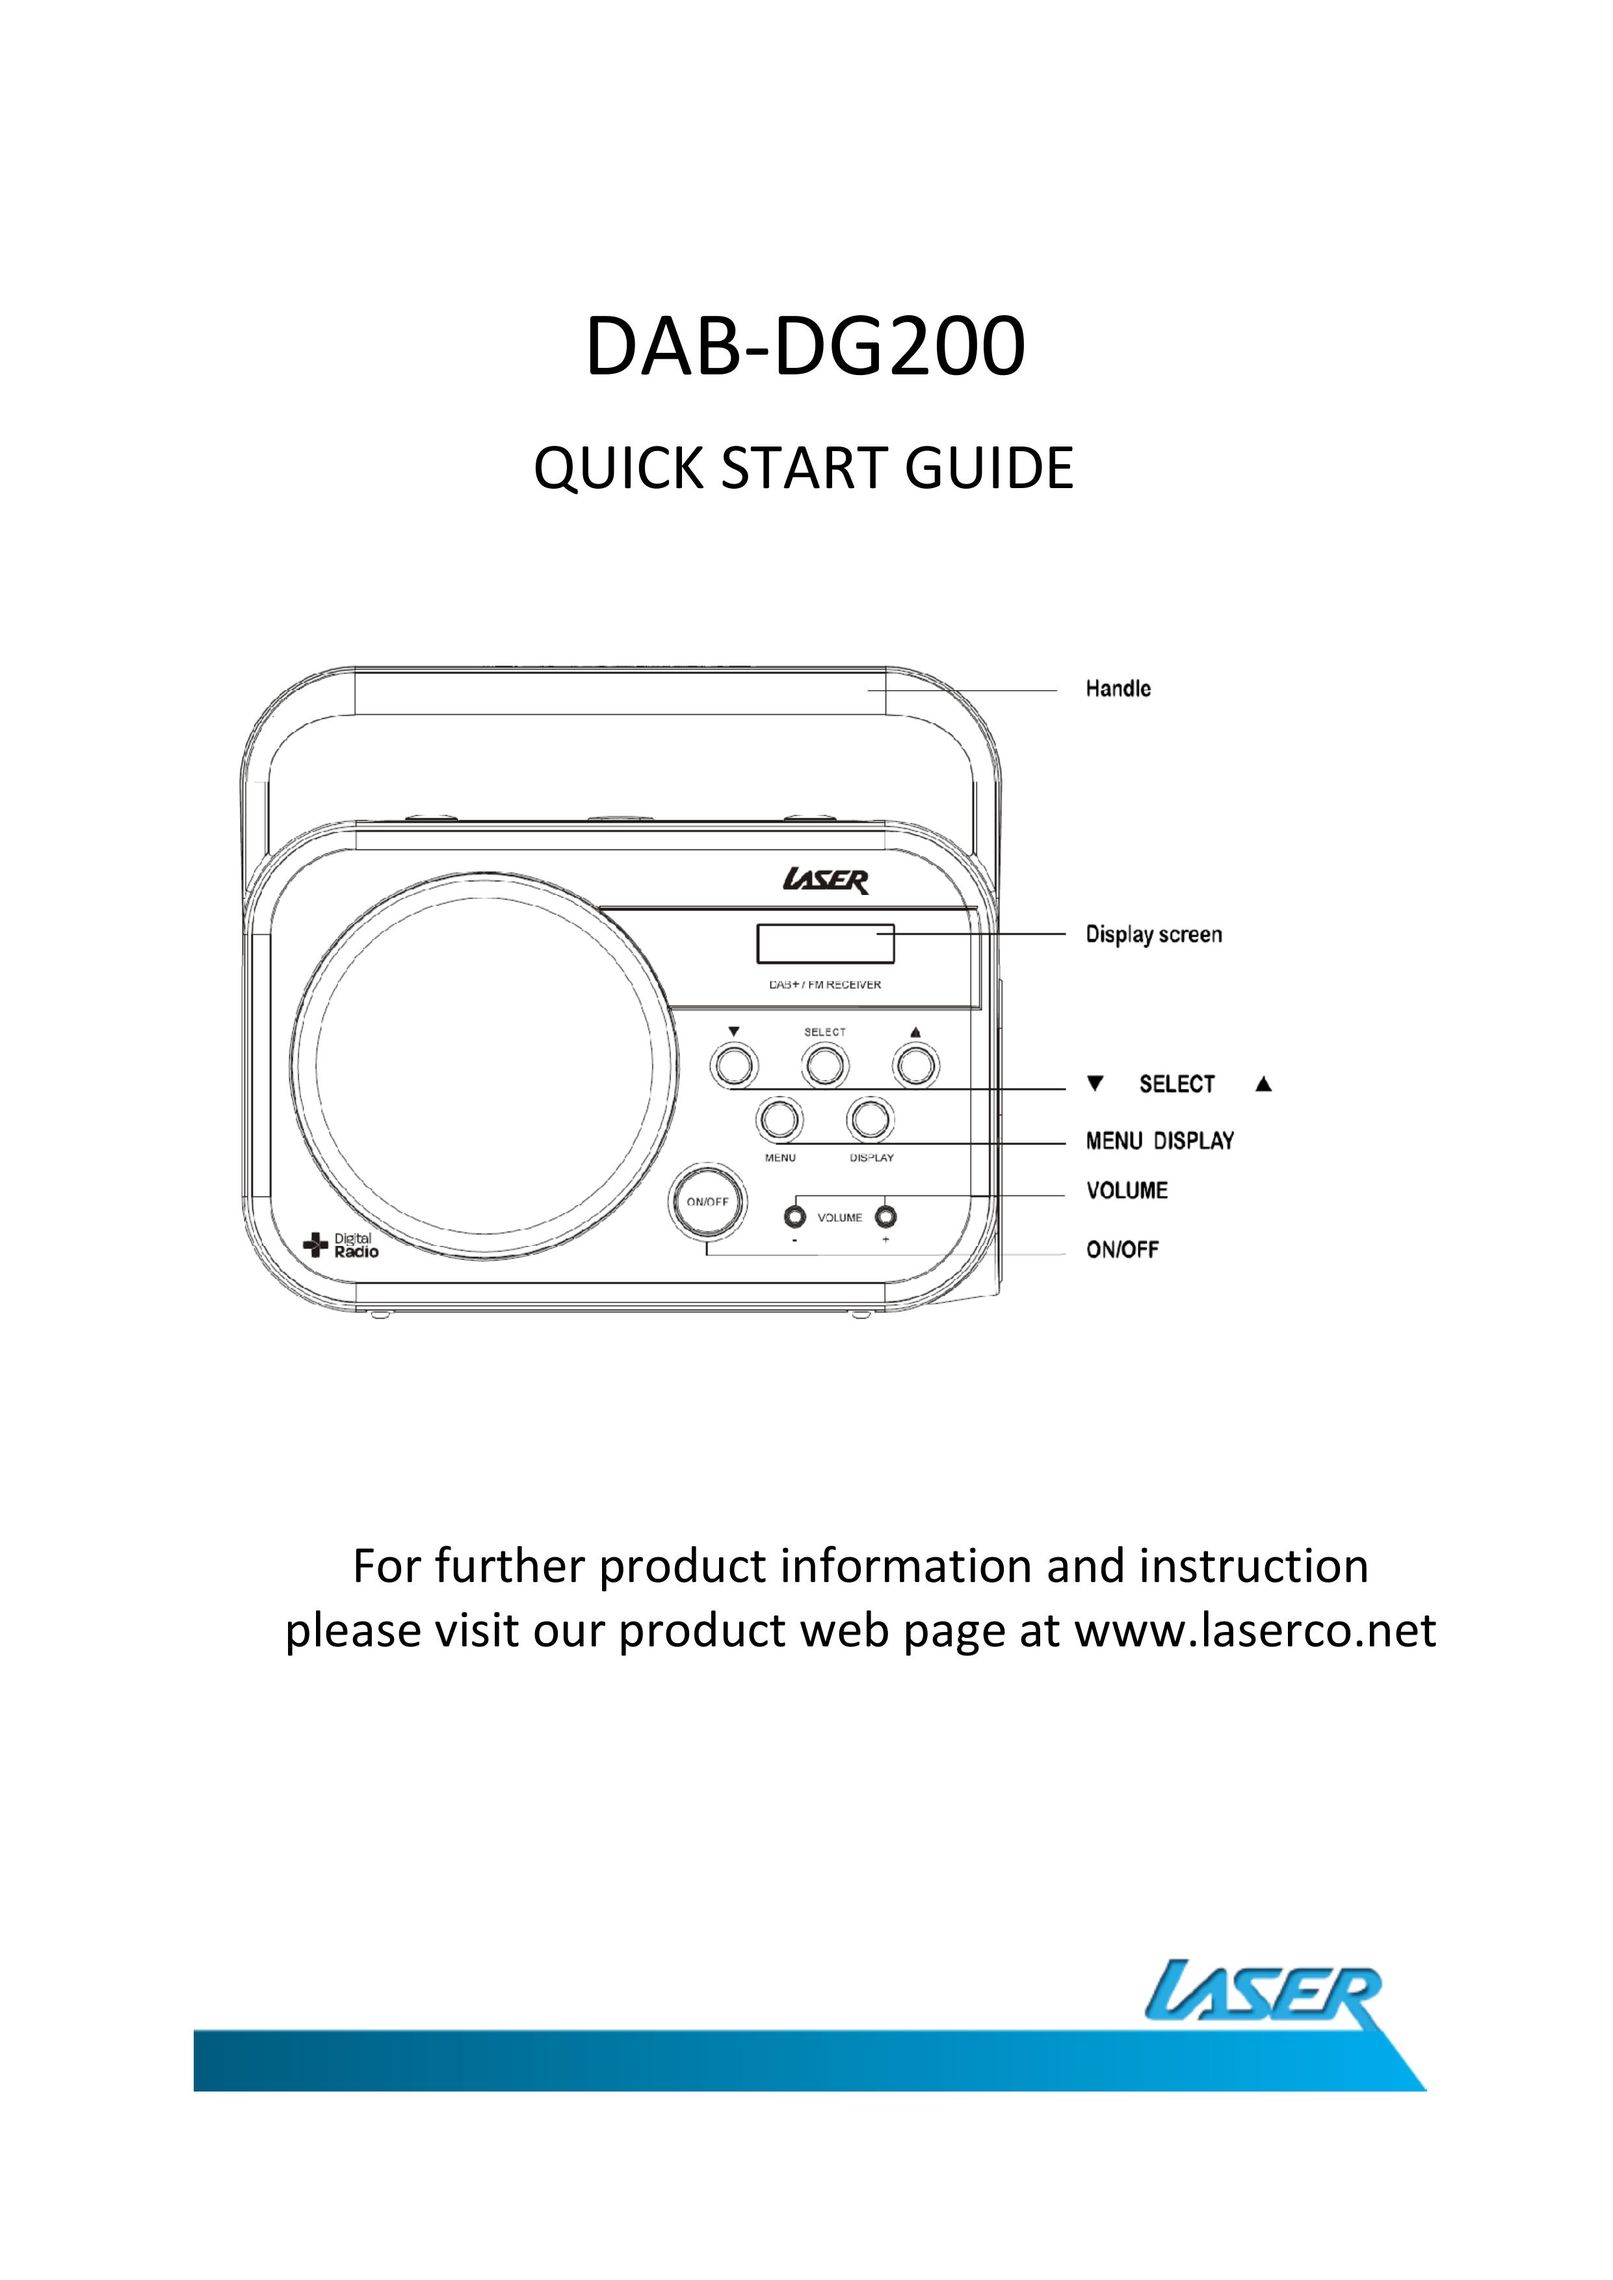 Laser DAB-DG200 Radio User Manual